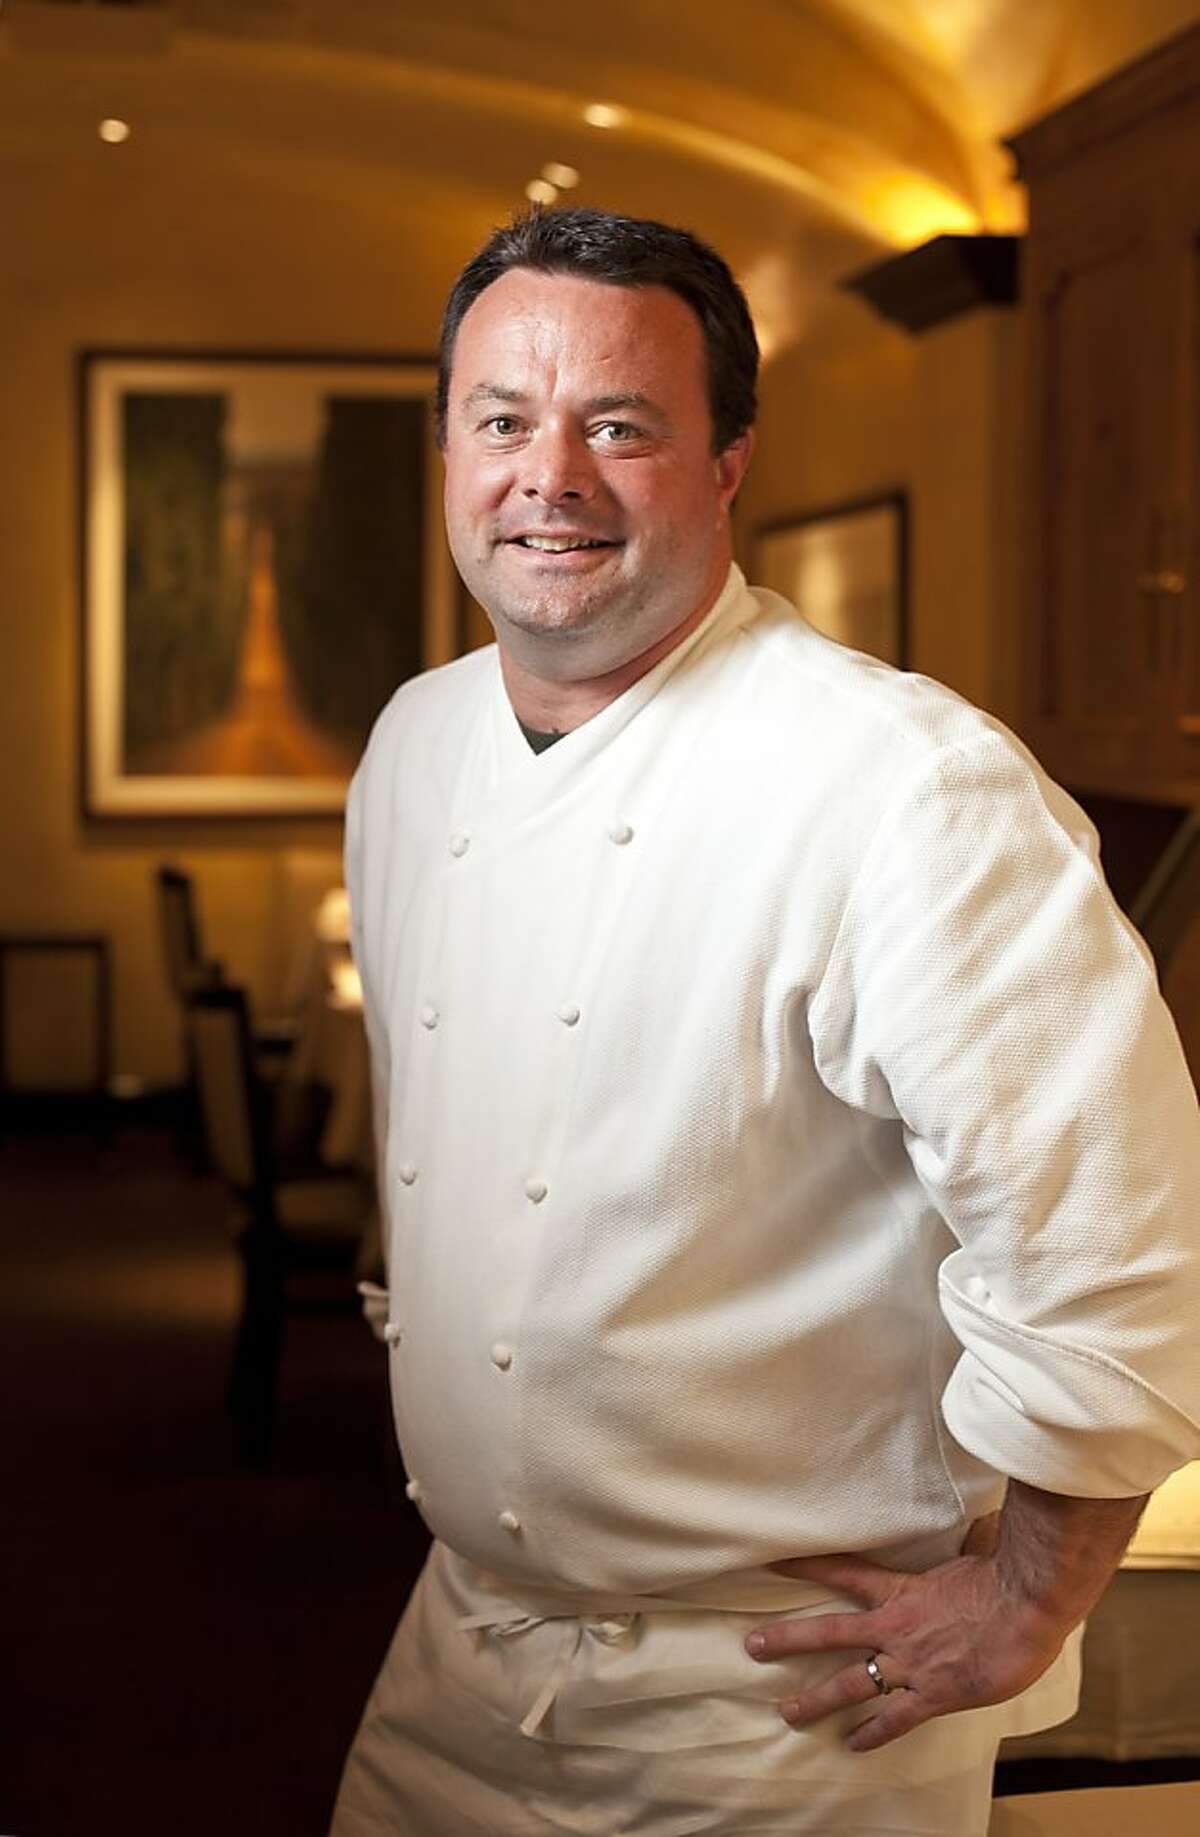 Douglas Keane, chef and owner of Cyrus restaurant in Healdsburg, California on Thursday, October 25, 2012.